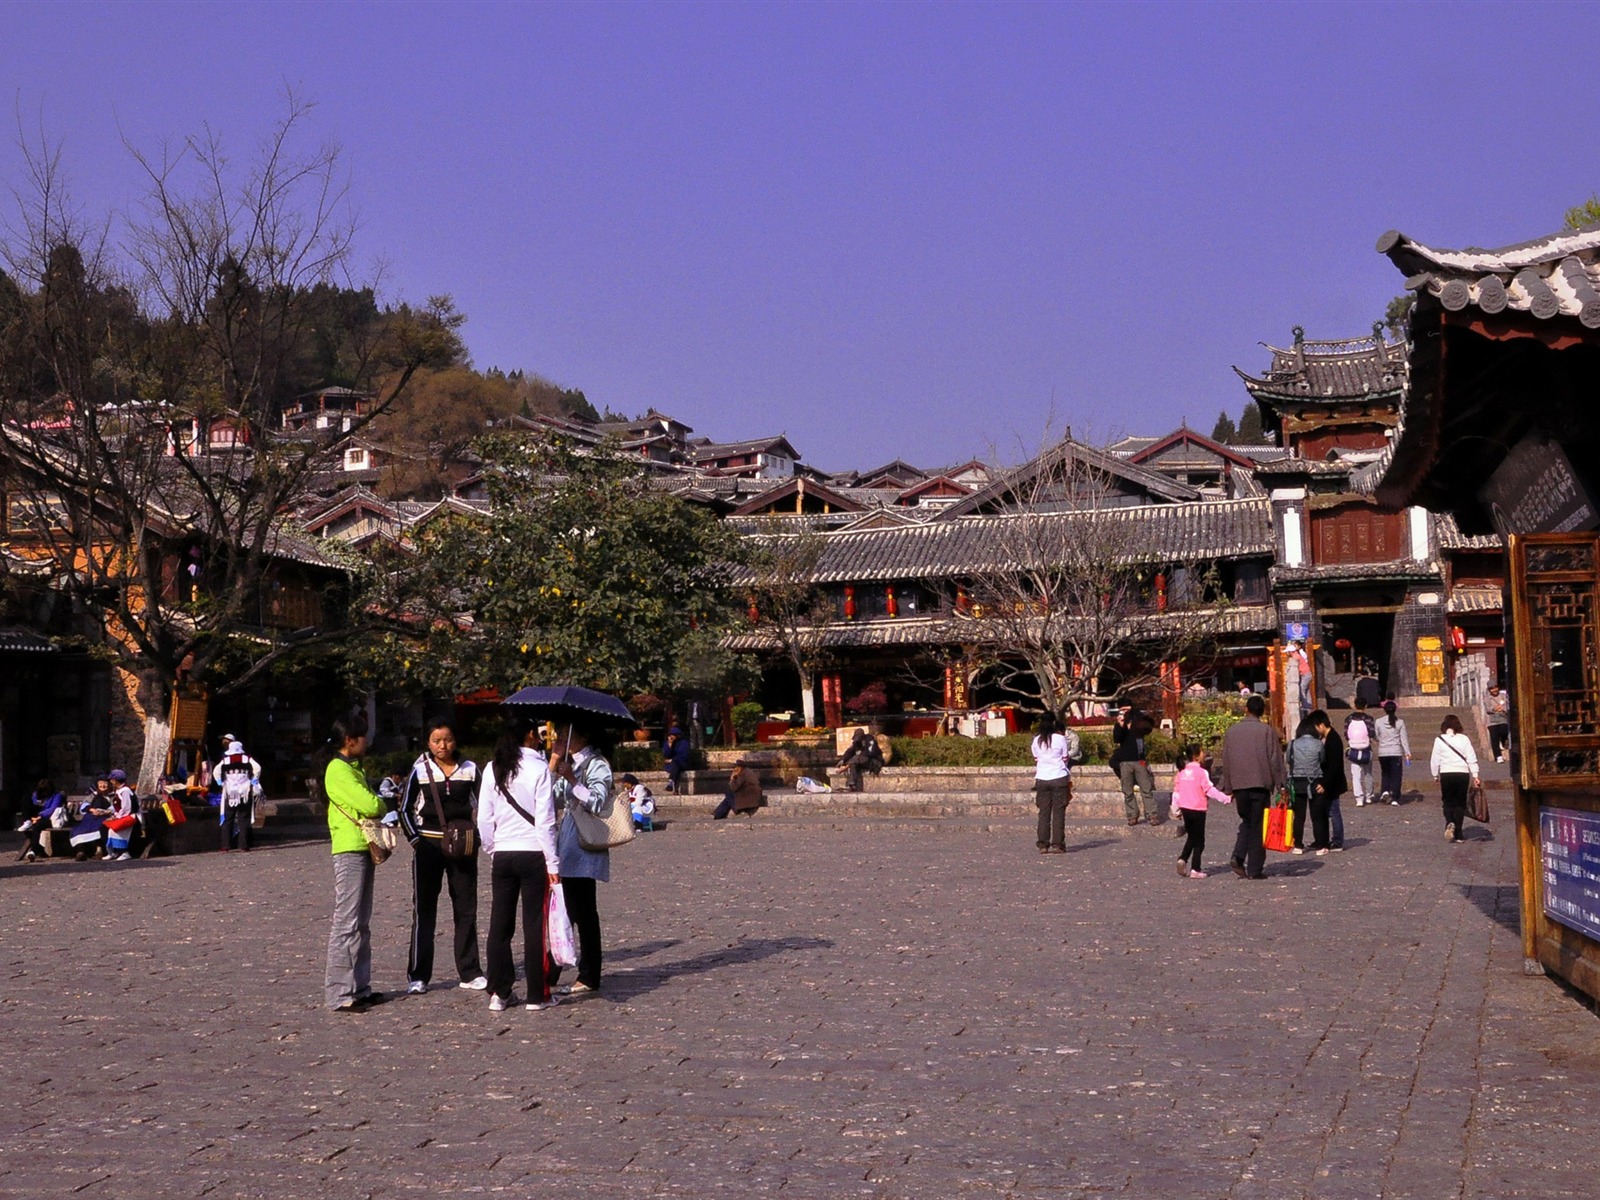 Lijiang ancient town atmosphere (2) (old Hong OK works) #12 - 1600x1200